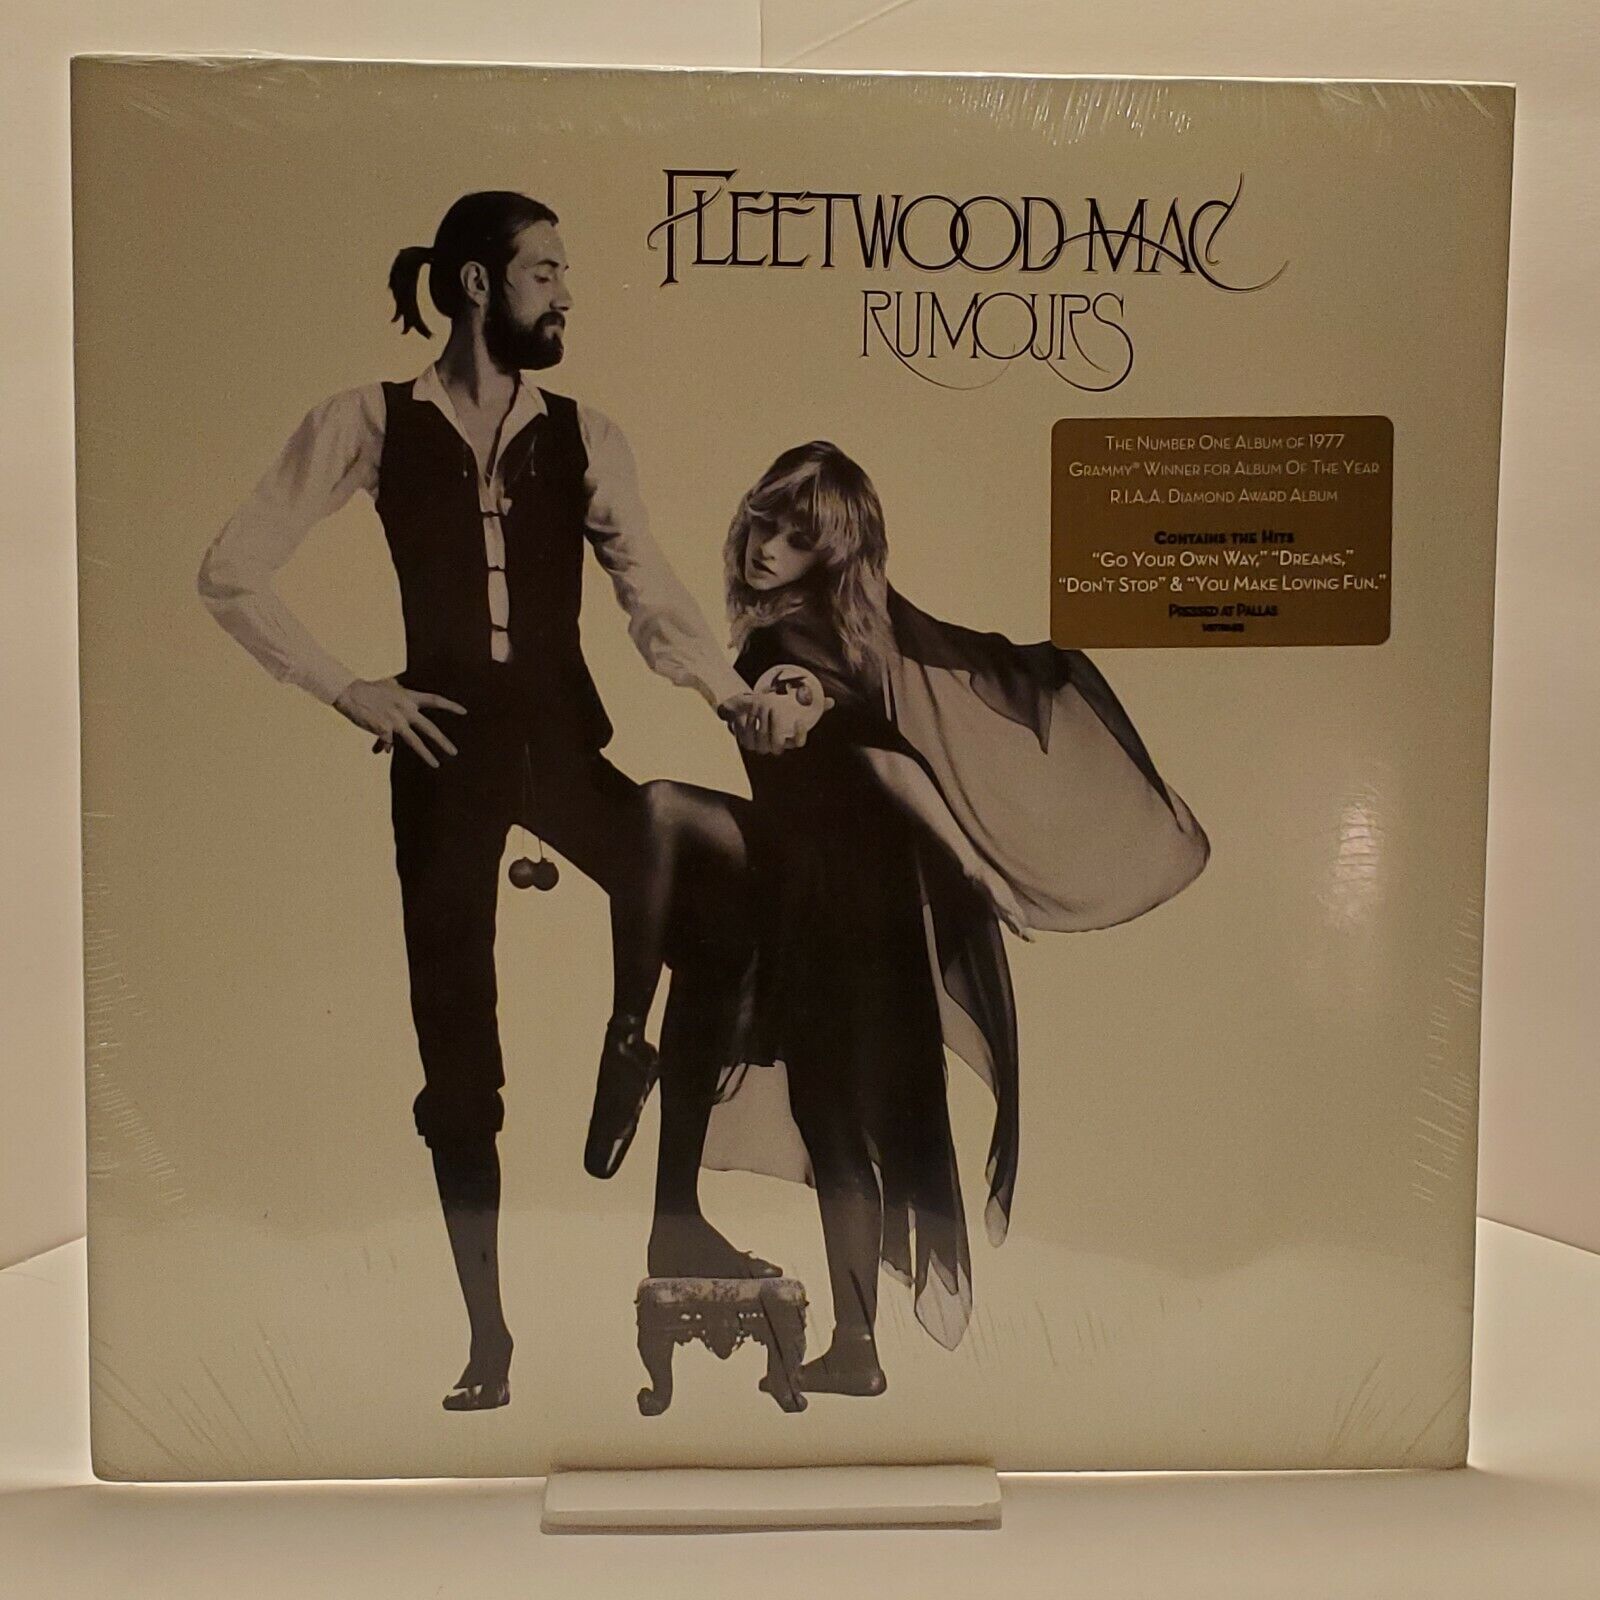 FLEETWOOD MAC - RUMOURS - Brand new vinyl LP record Unopened (2009 pressing)